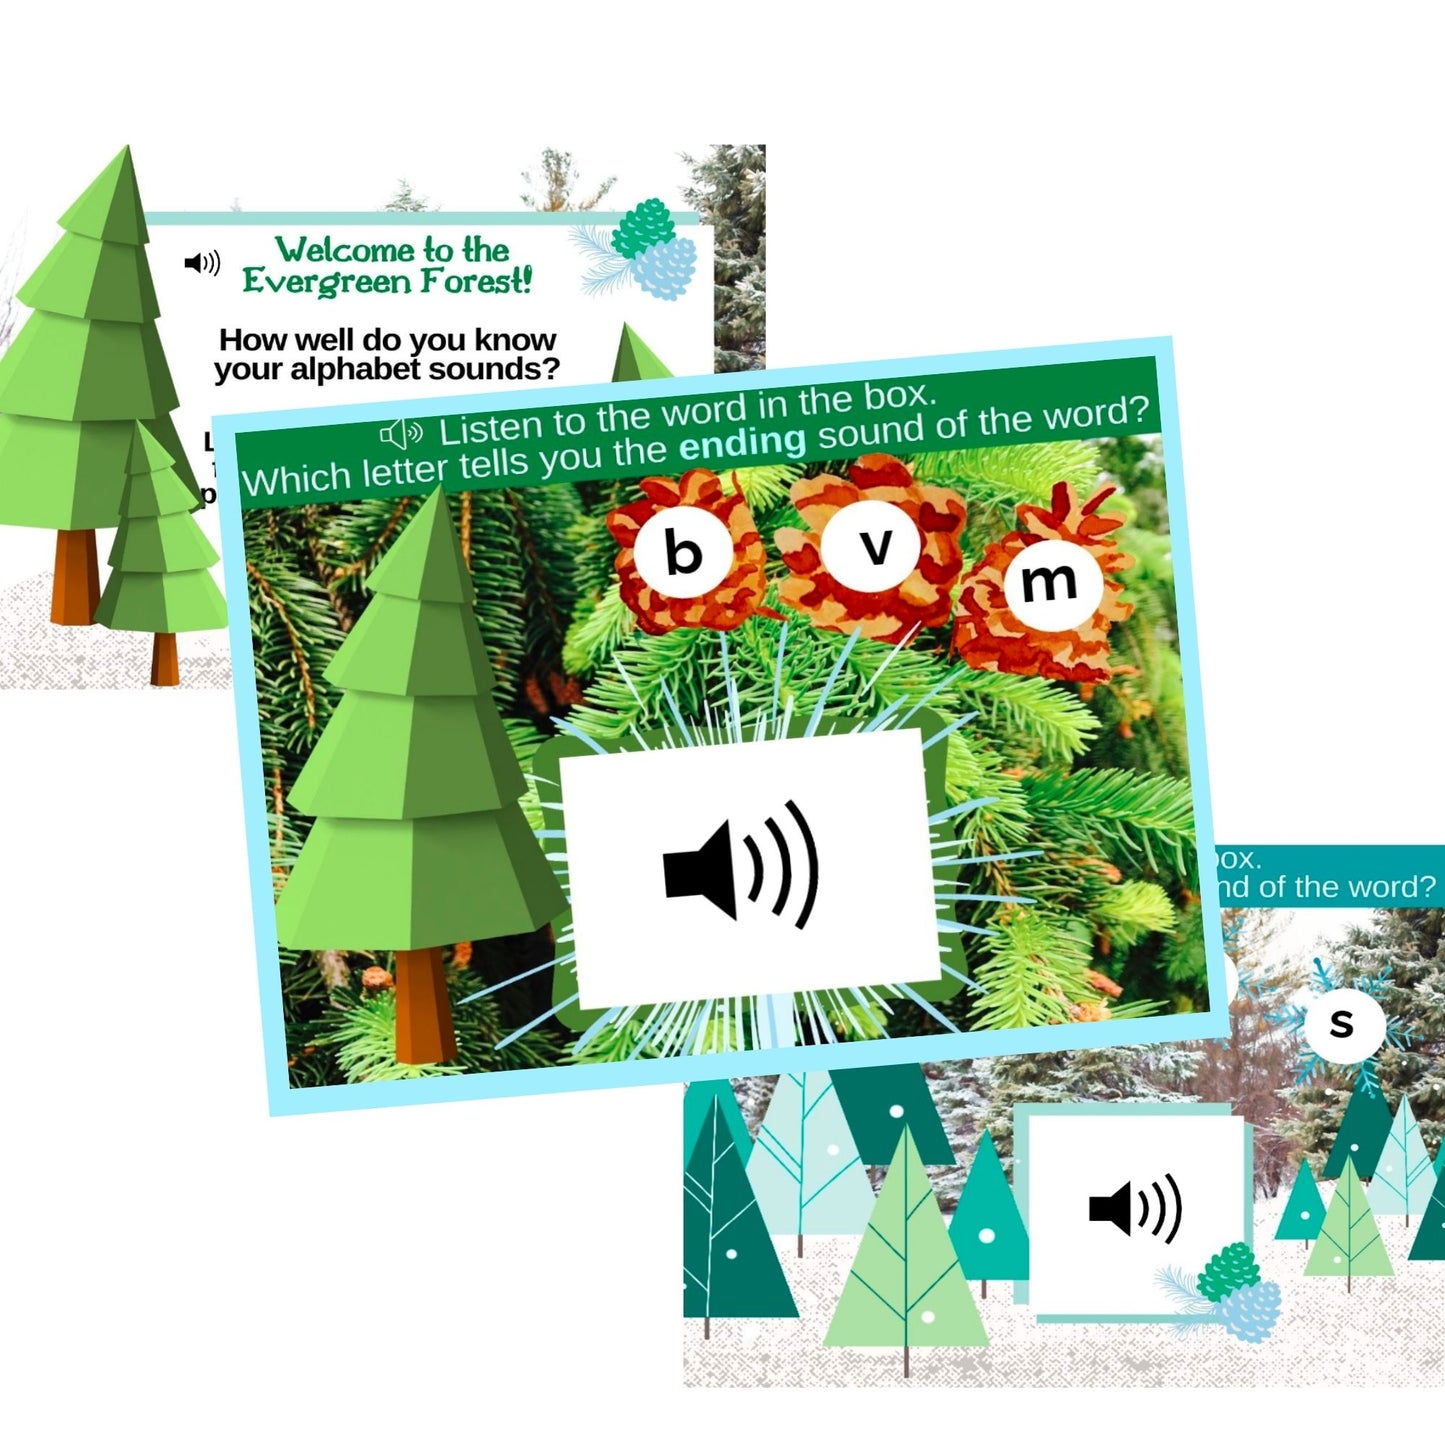 Final Sounds Practice Digital Activity Winter/Evergreen Themed